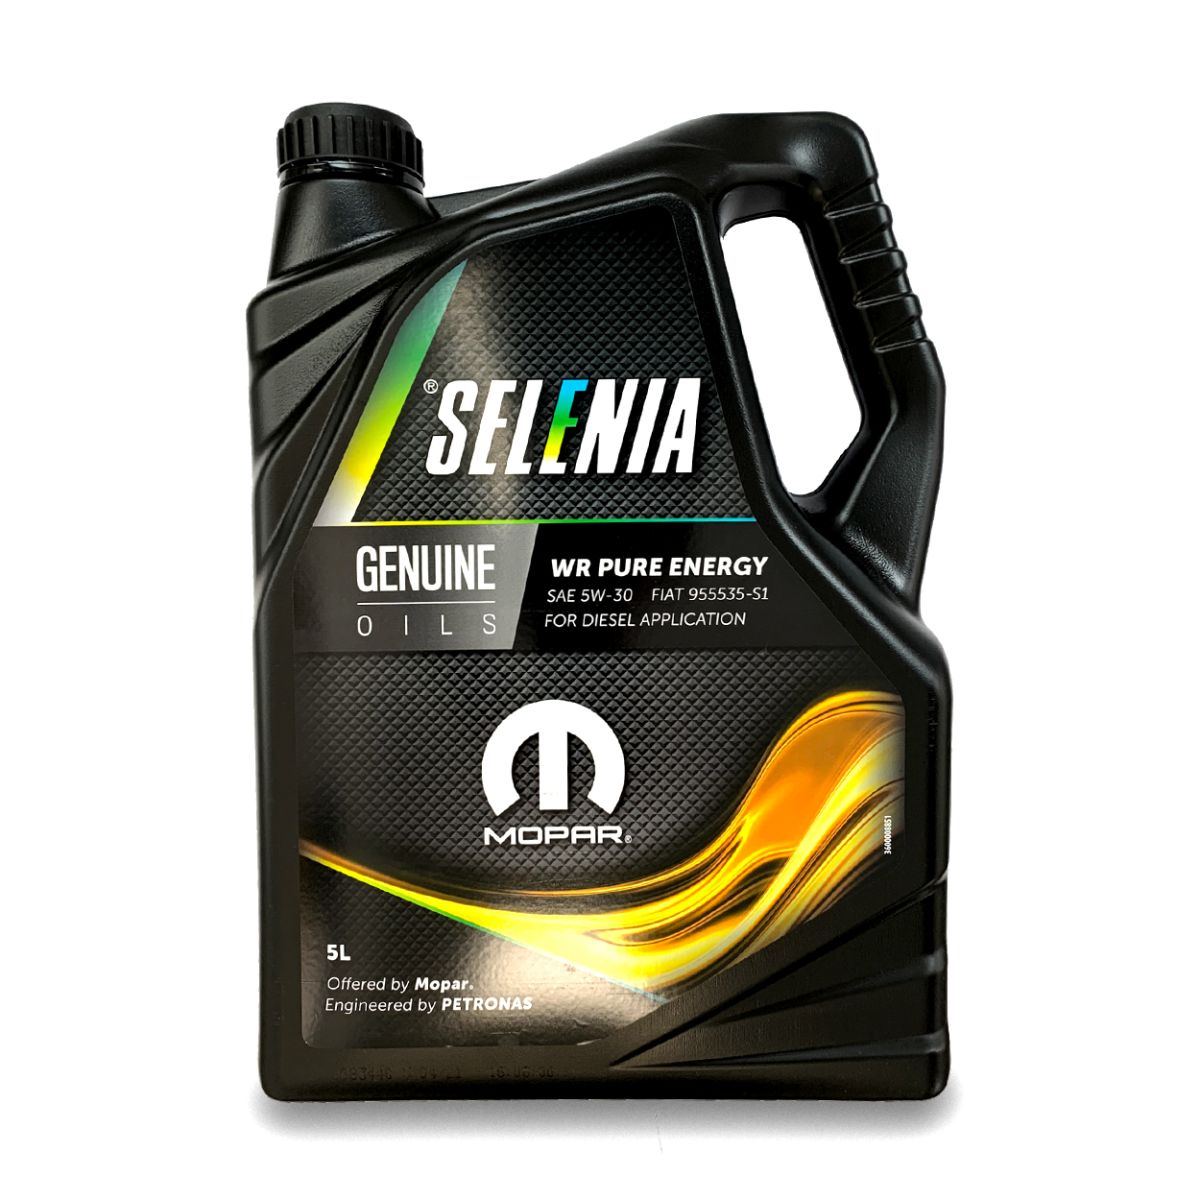 Selenia WR Pure Energy 5W30, 5L